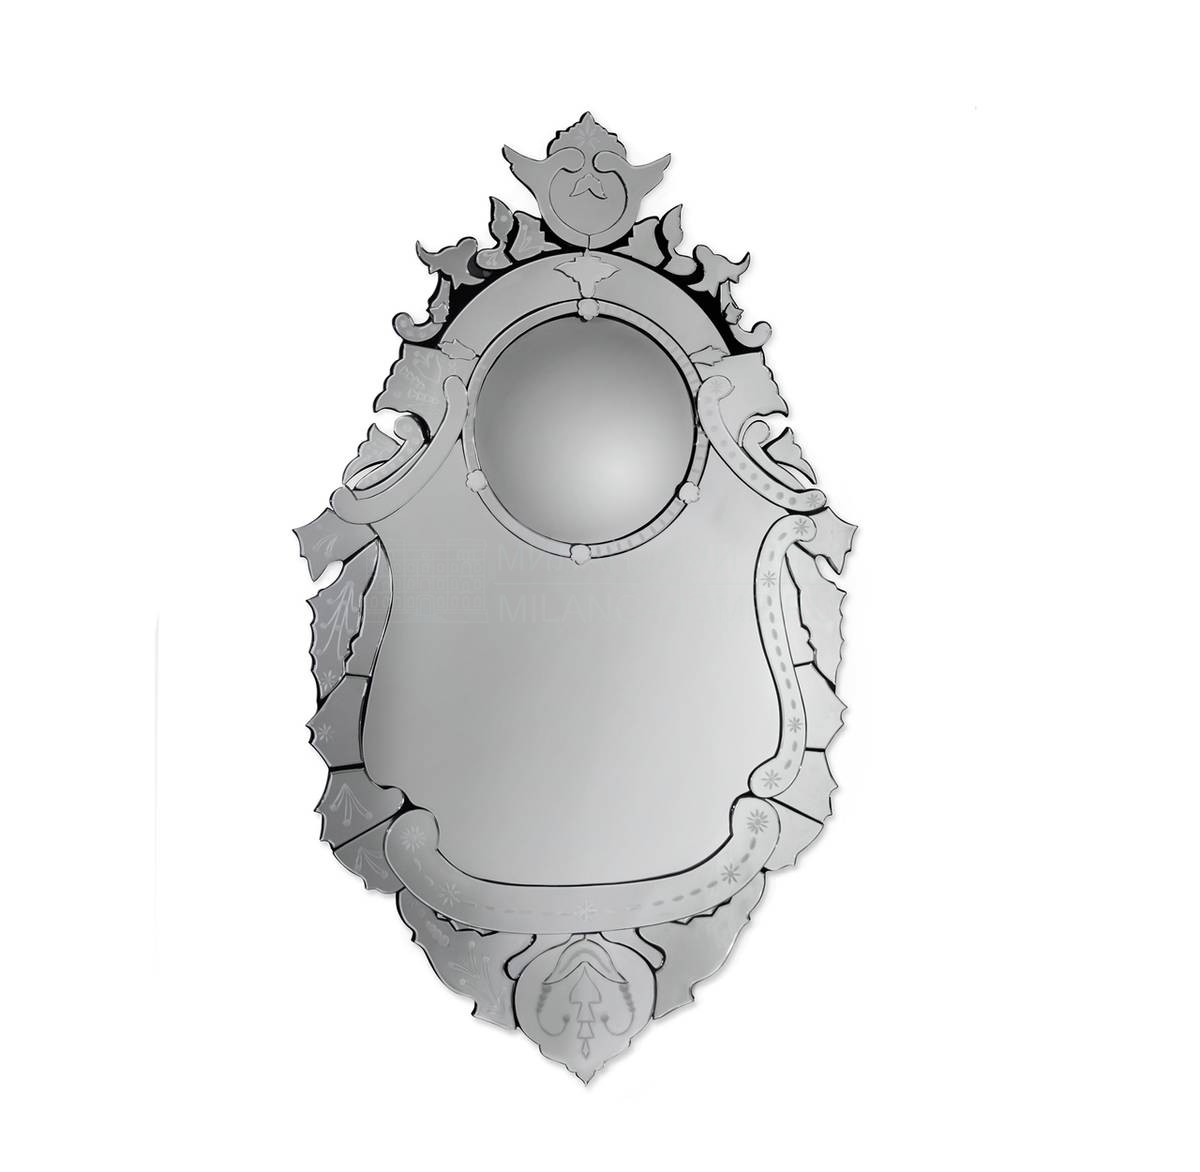 Зеркало настенное Veneto/mirror из Португалии фабрики BOCA DO LOBO